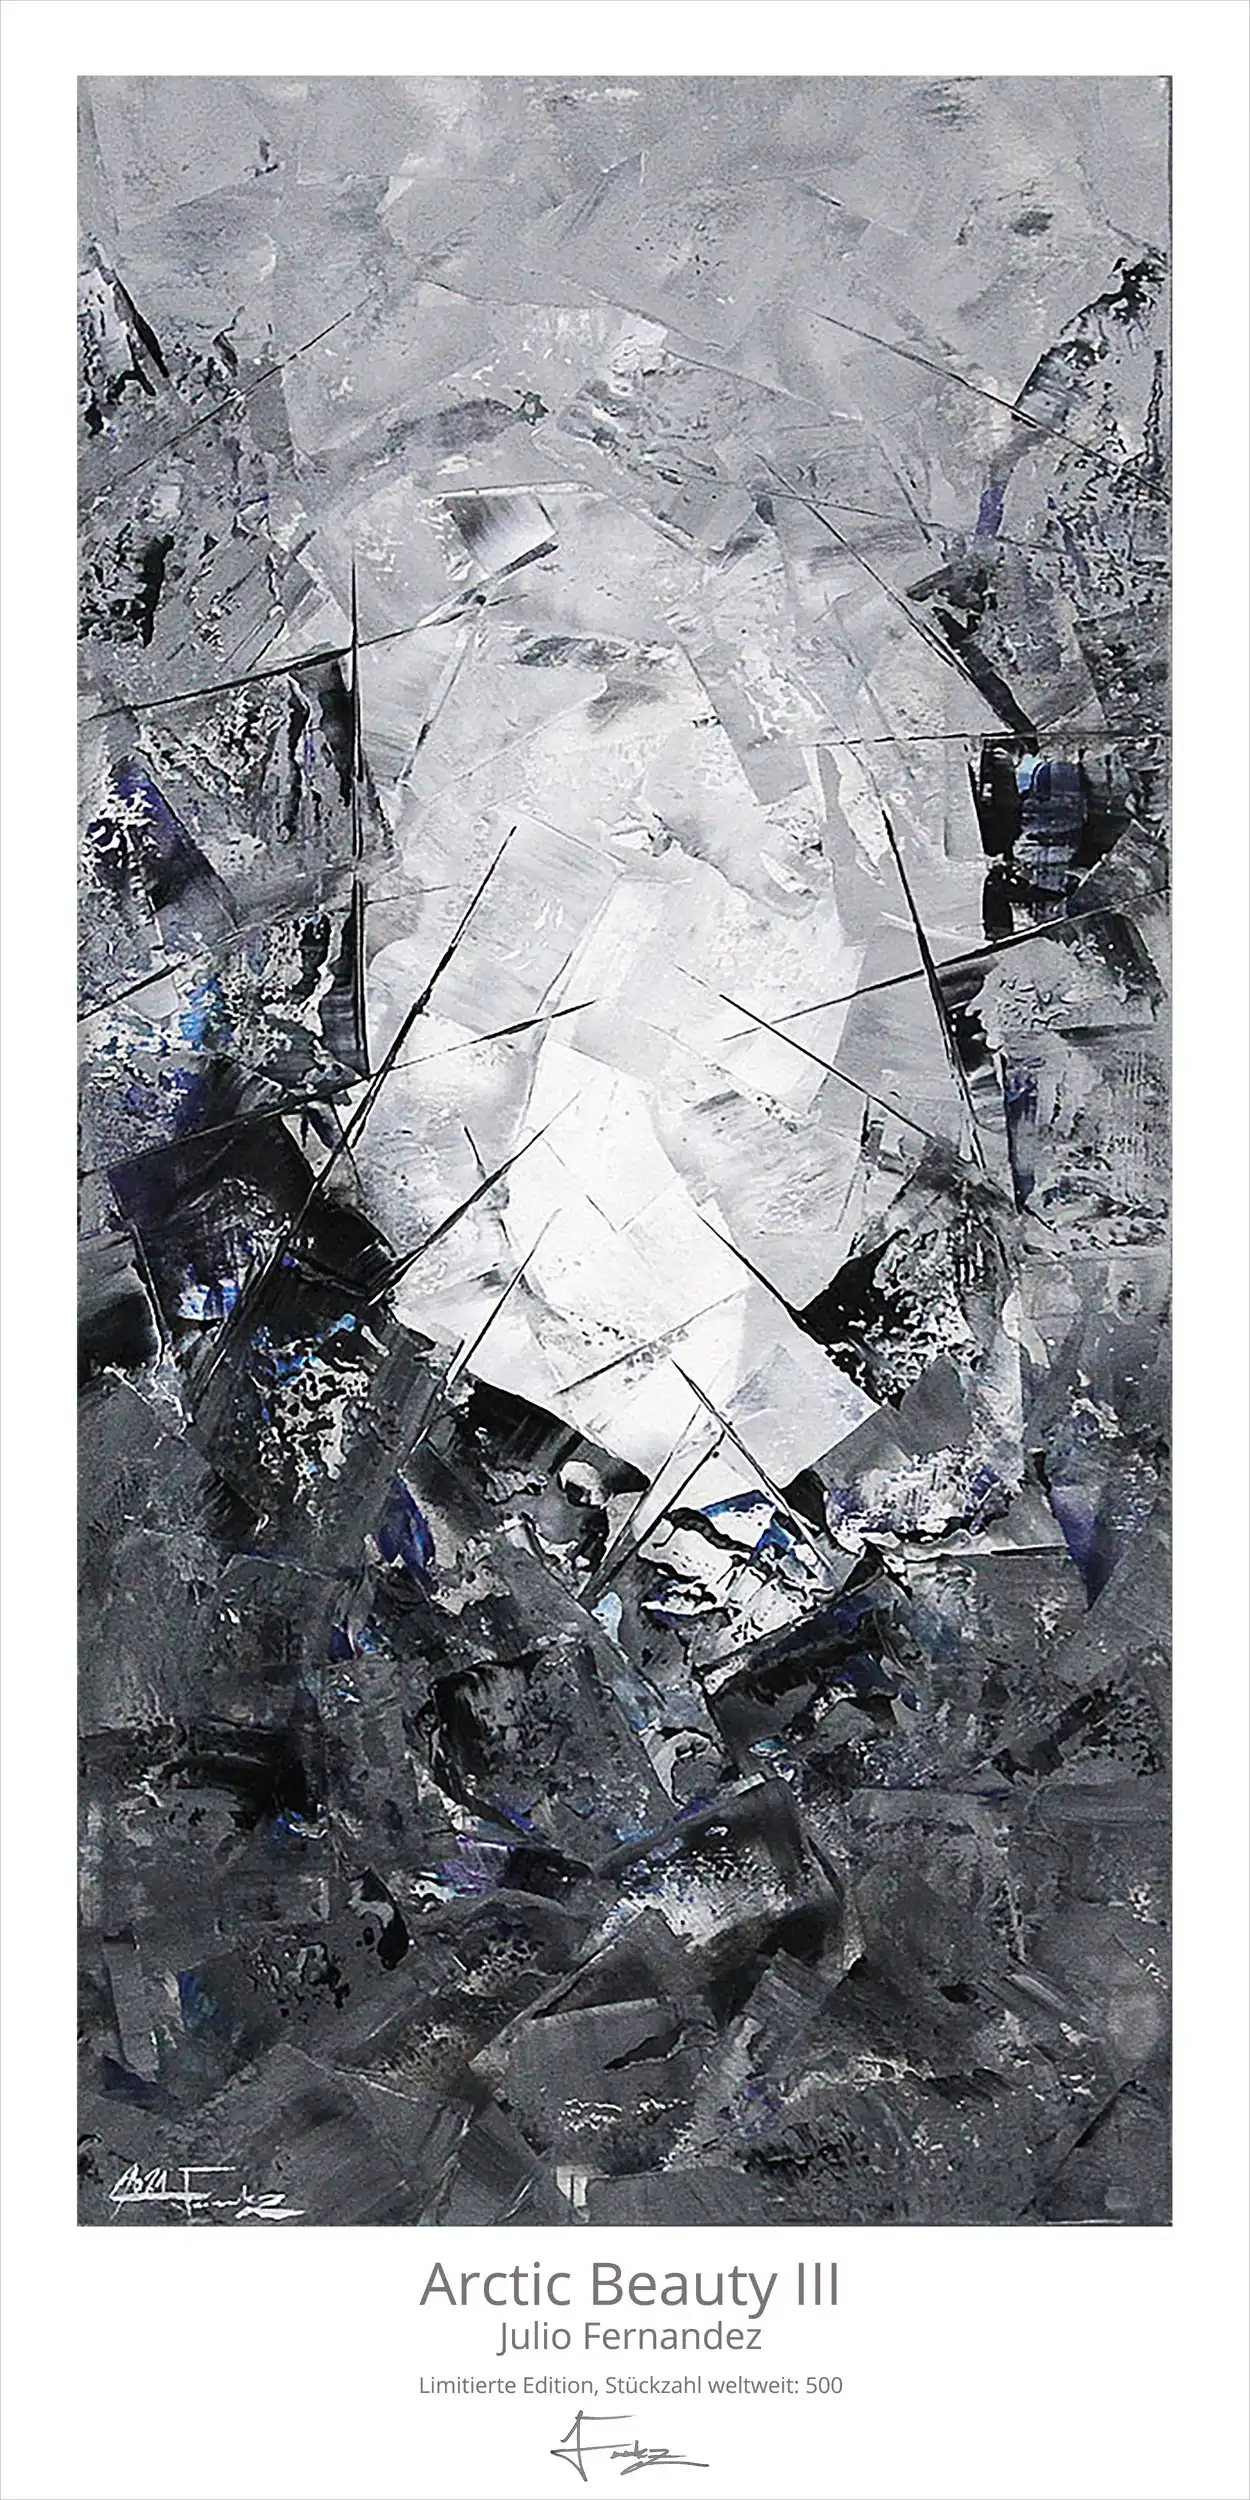 Limitierte Edition auf Papier, J. Fernandez "Arctic Beauty III", Fineartprint, Kollektion E&K